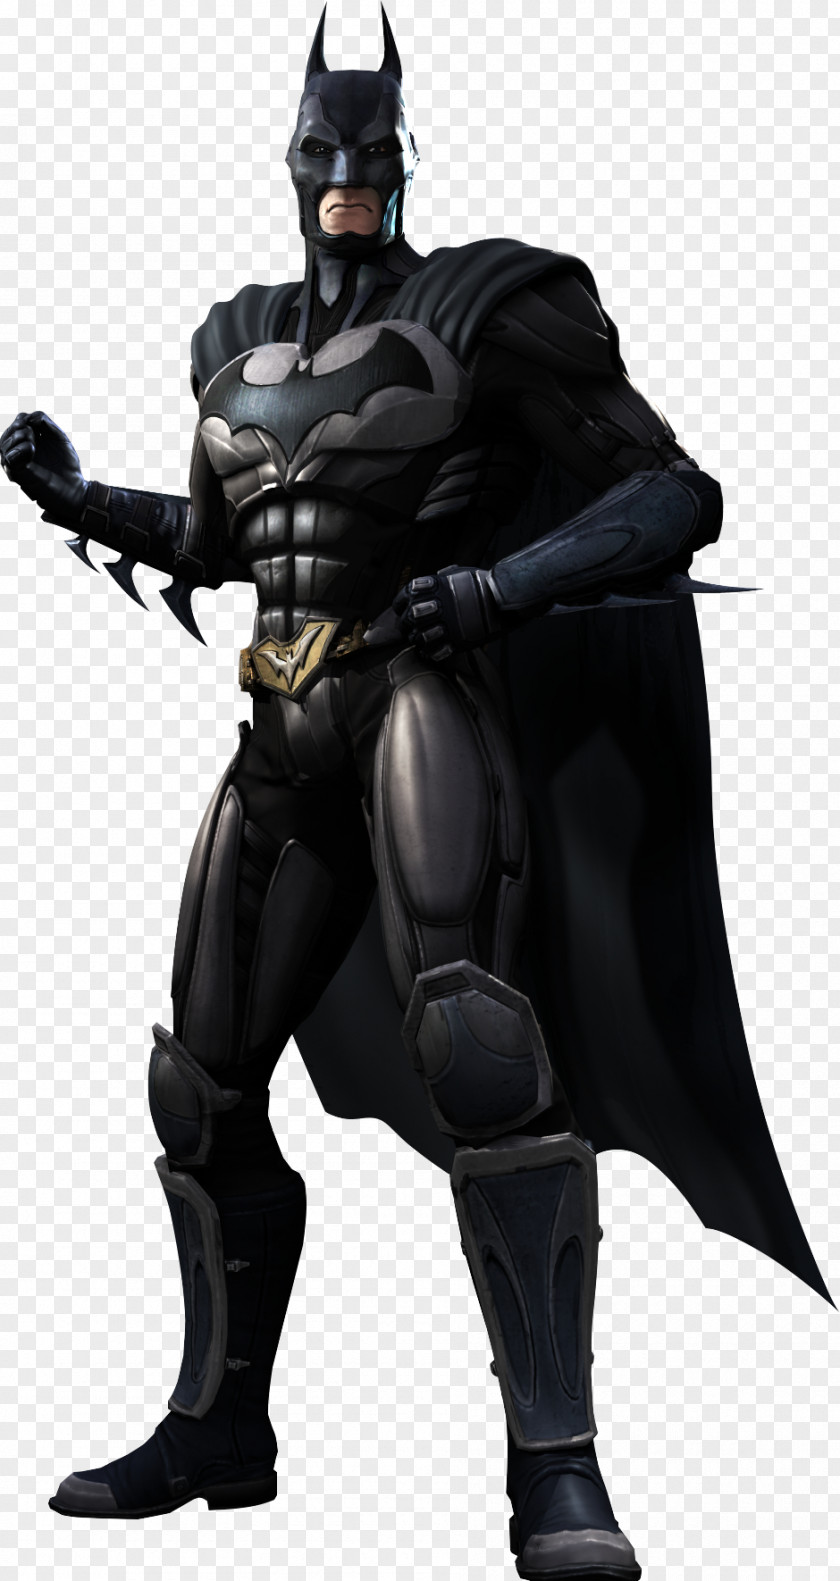 Dc Comics Injustice: Gods Among Us Batman: Arkham Asylum Injustice 2 Superman PNG